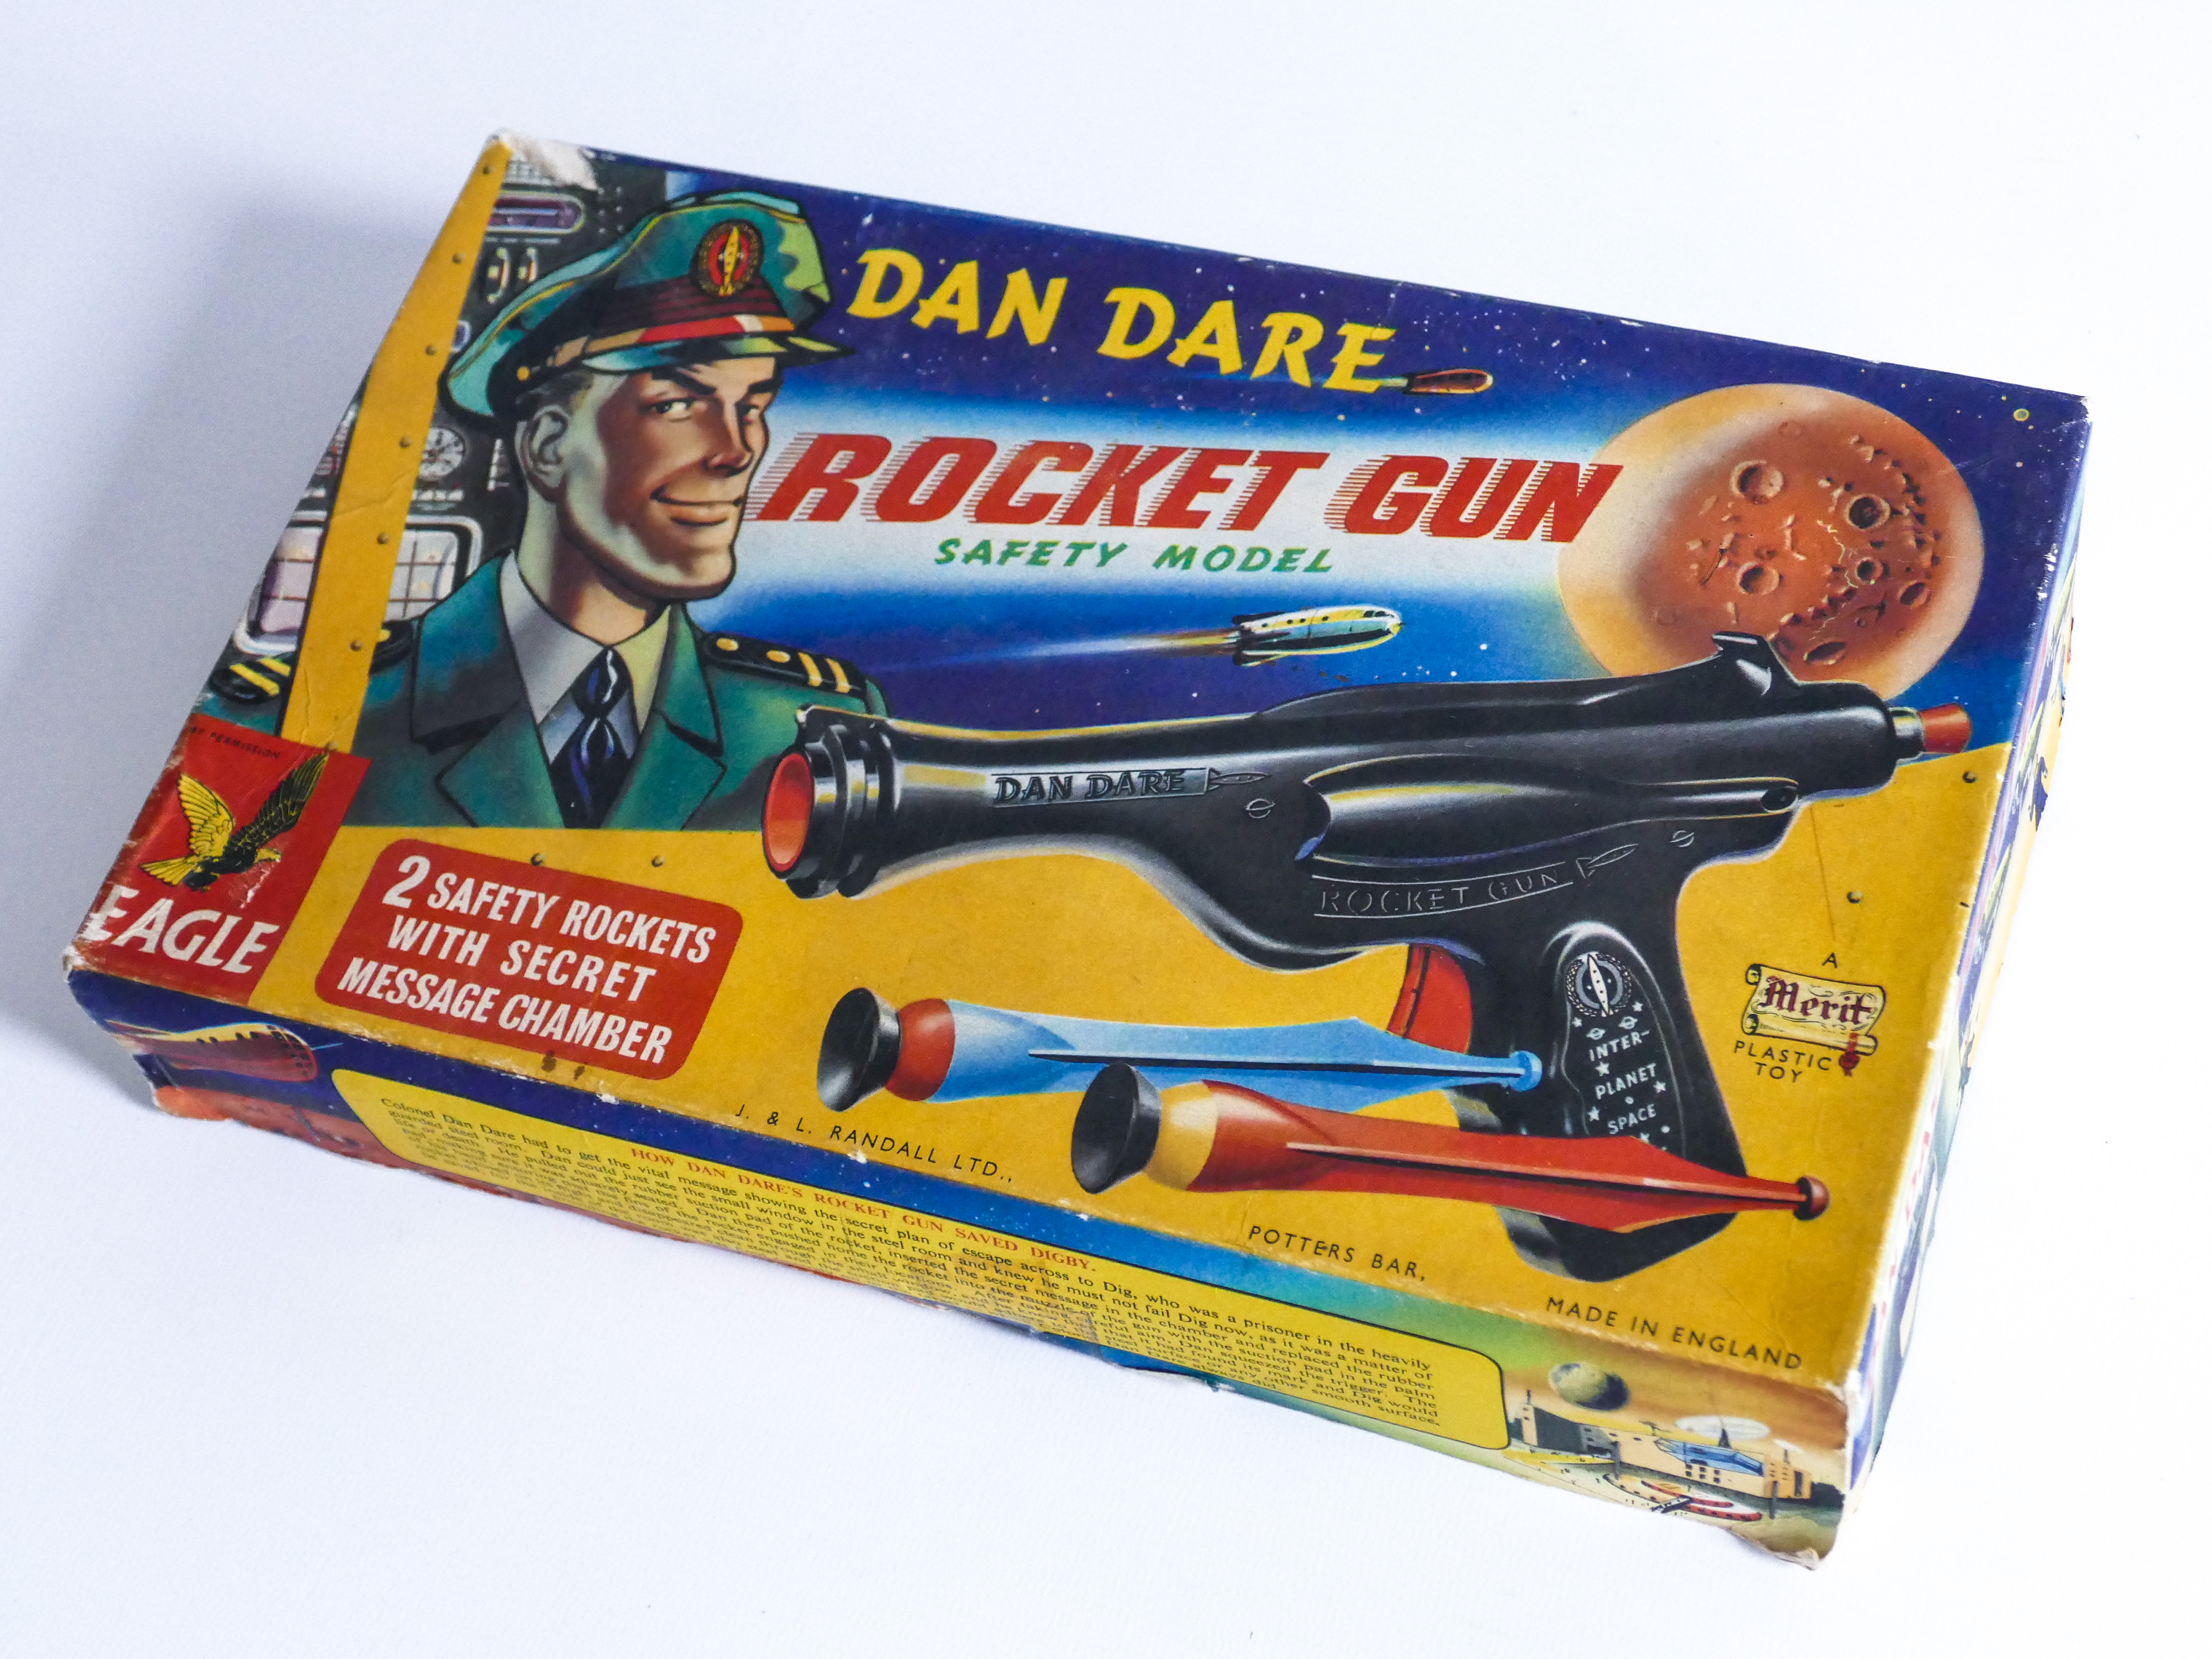 DAN DARE ROCKET GUN, EAGLE MERIT RAYGUN, 1950's SCI-FI SPACE TOY. MADE IN ENGLAND.